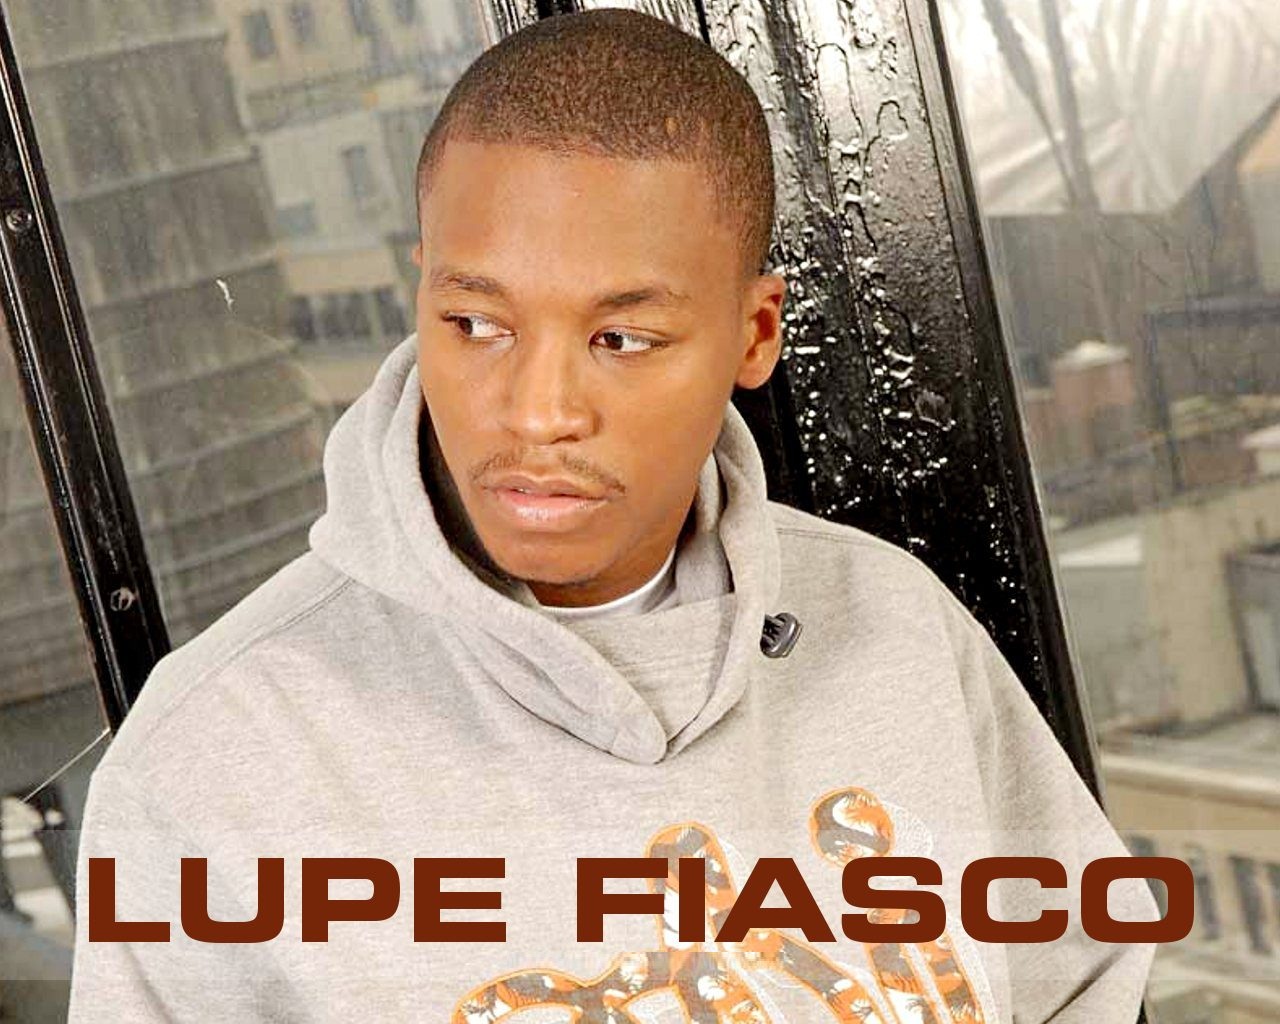 Lupe Fiasco Wallpaper Pictures Pics Photos Image Desktop